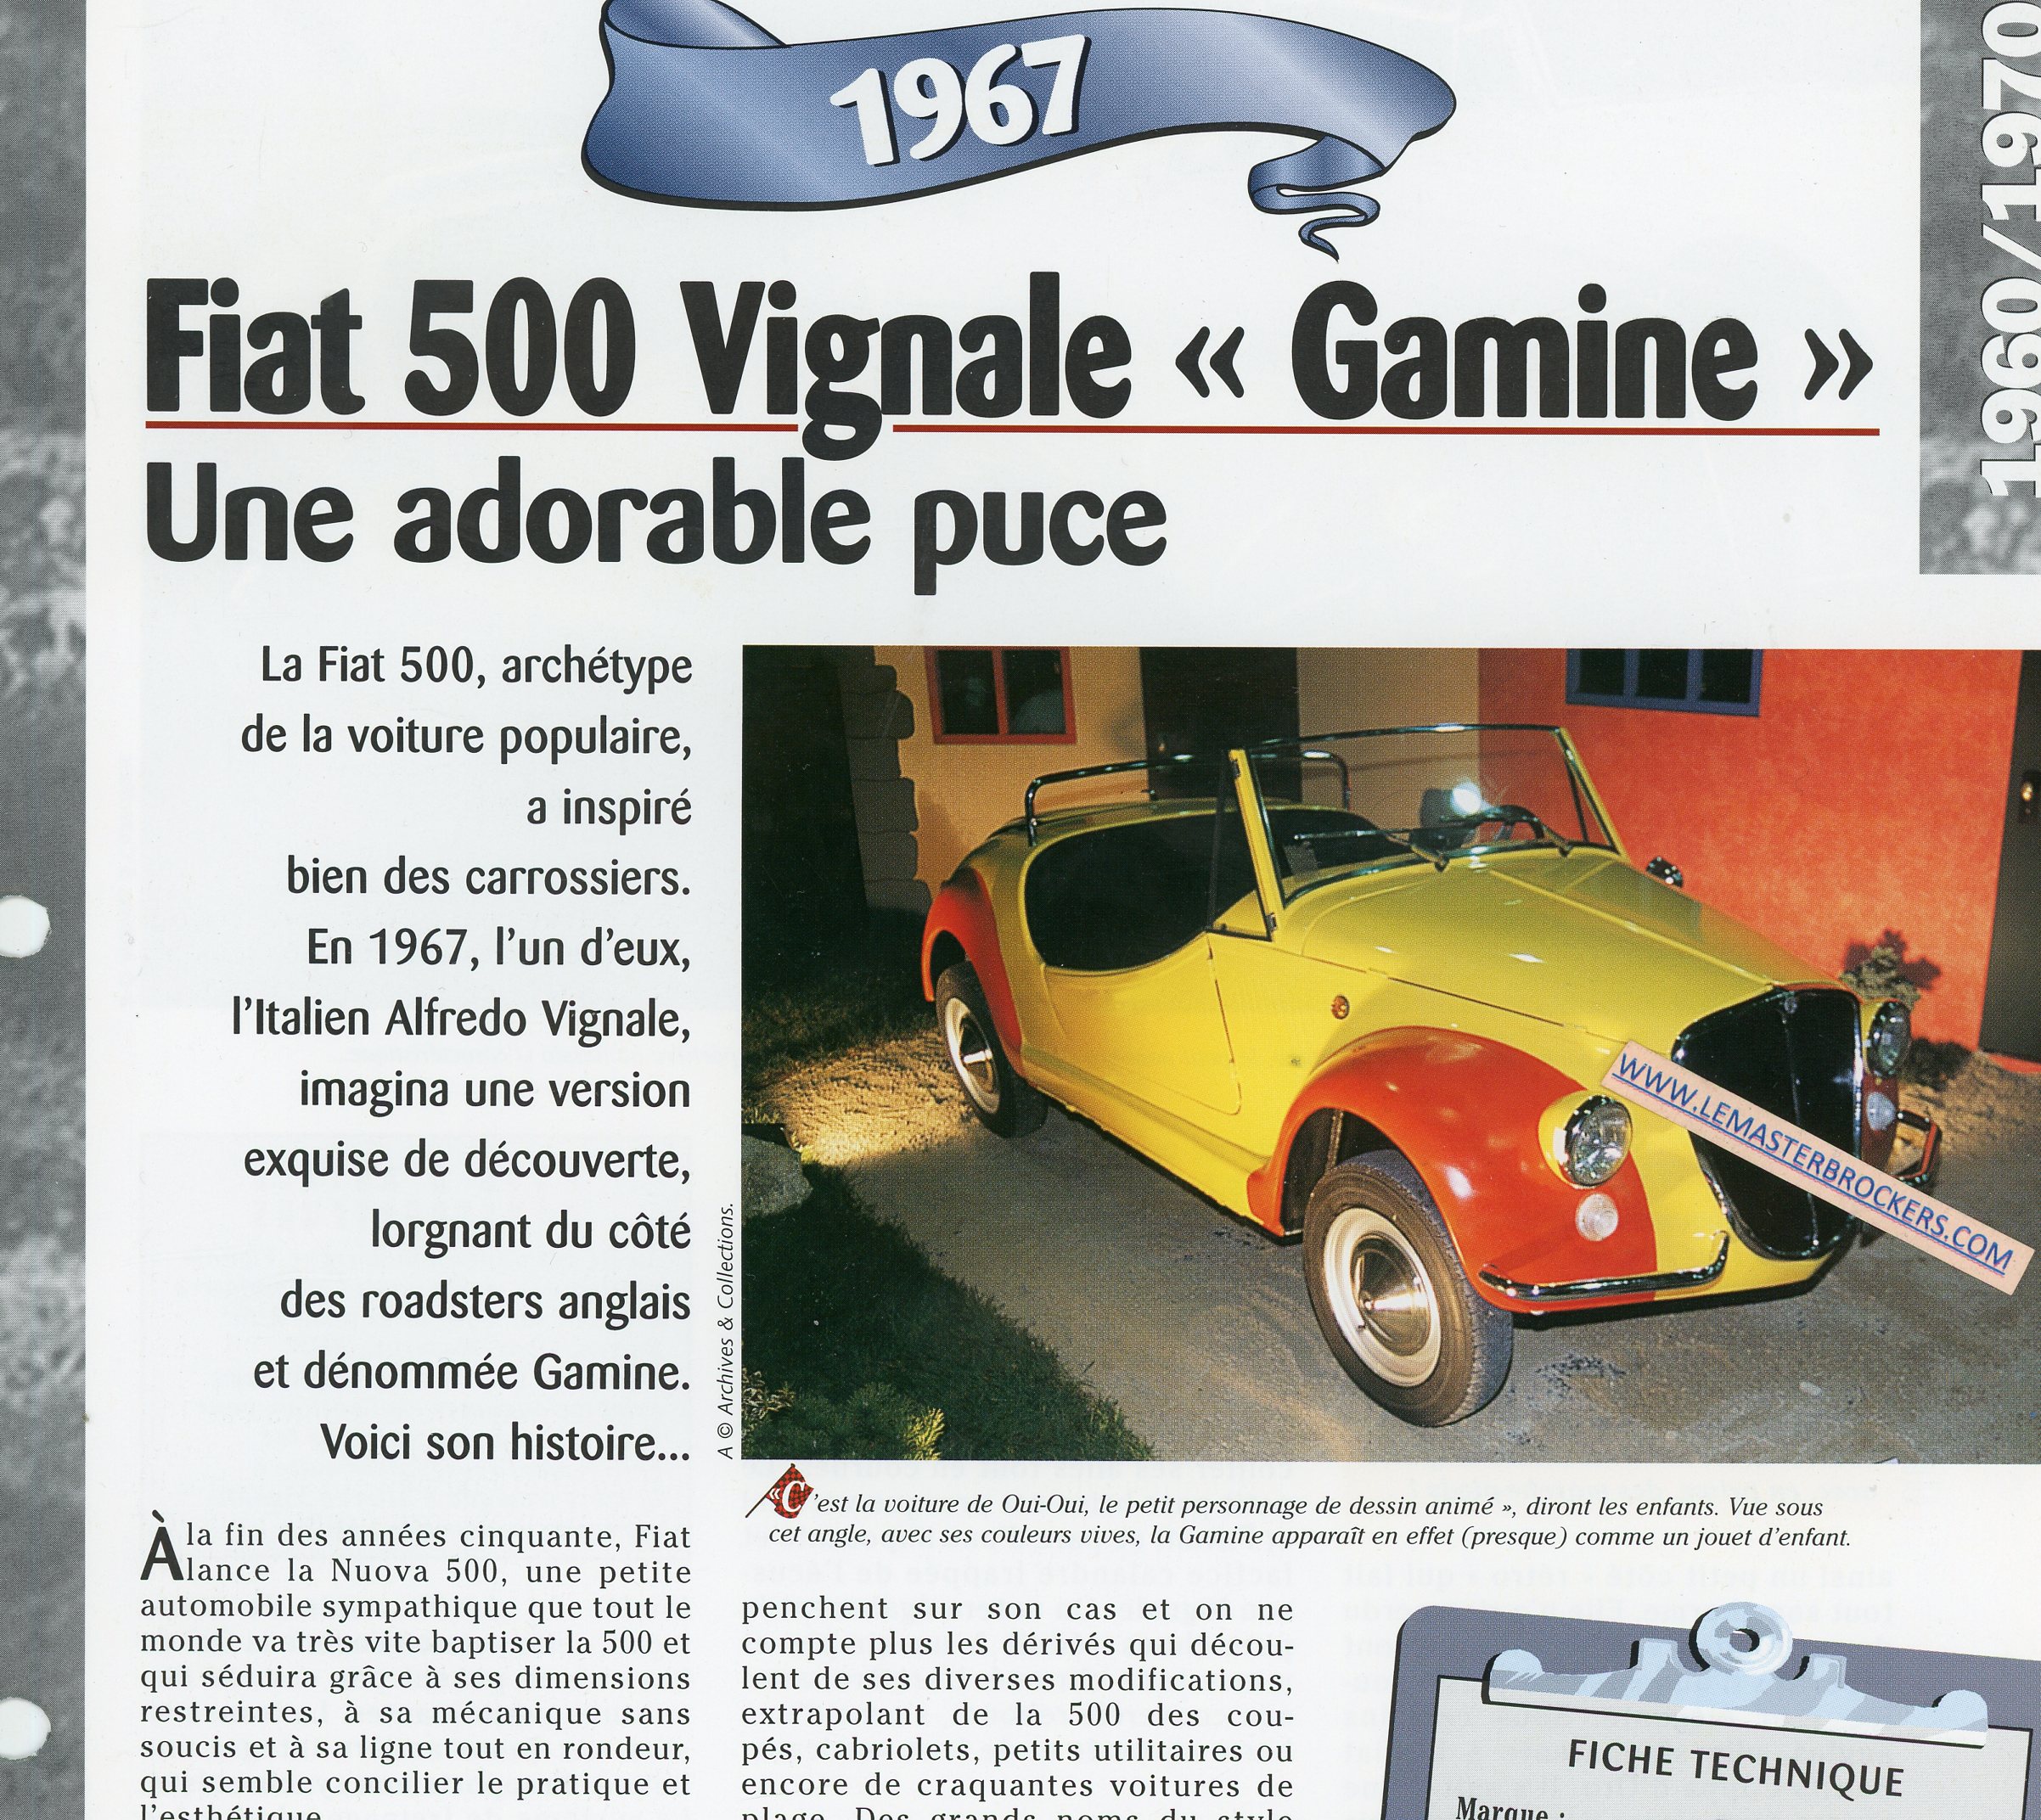 FIAT-500-VIGNALE-GAMINE-FICHE-TECHNIQUE-LEMASTERBROCKERS-COM